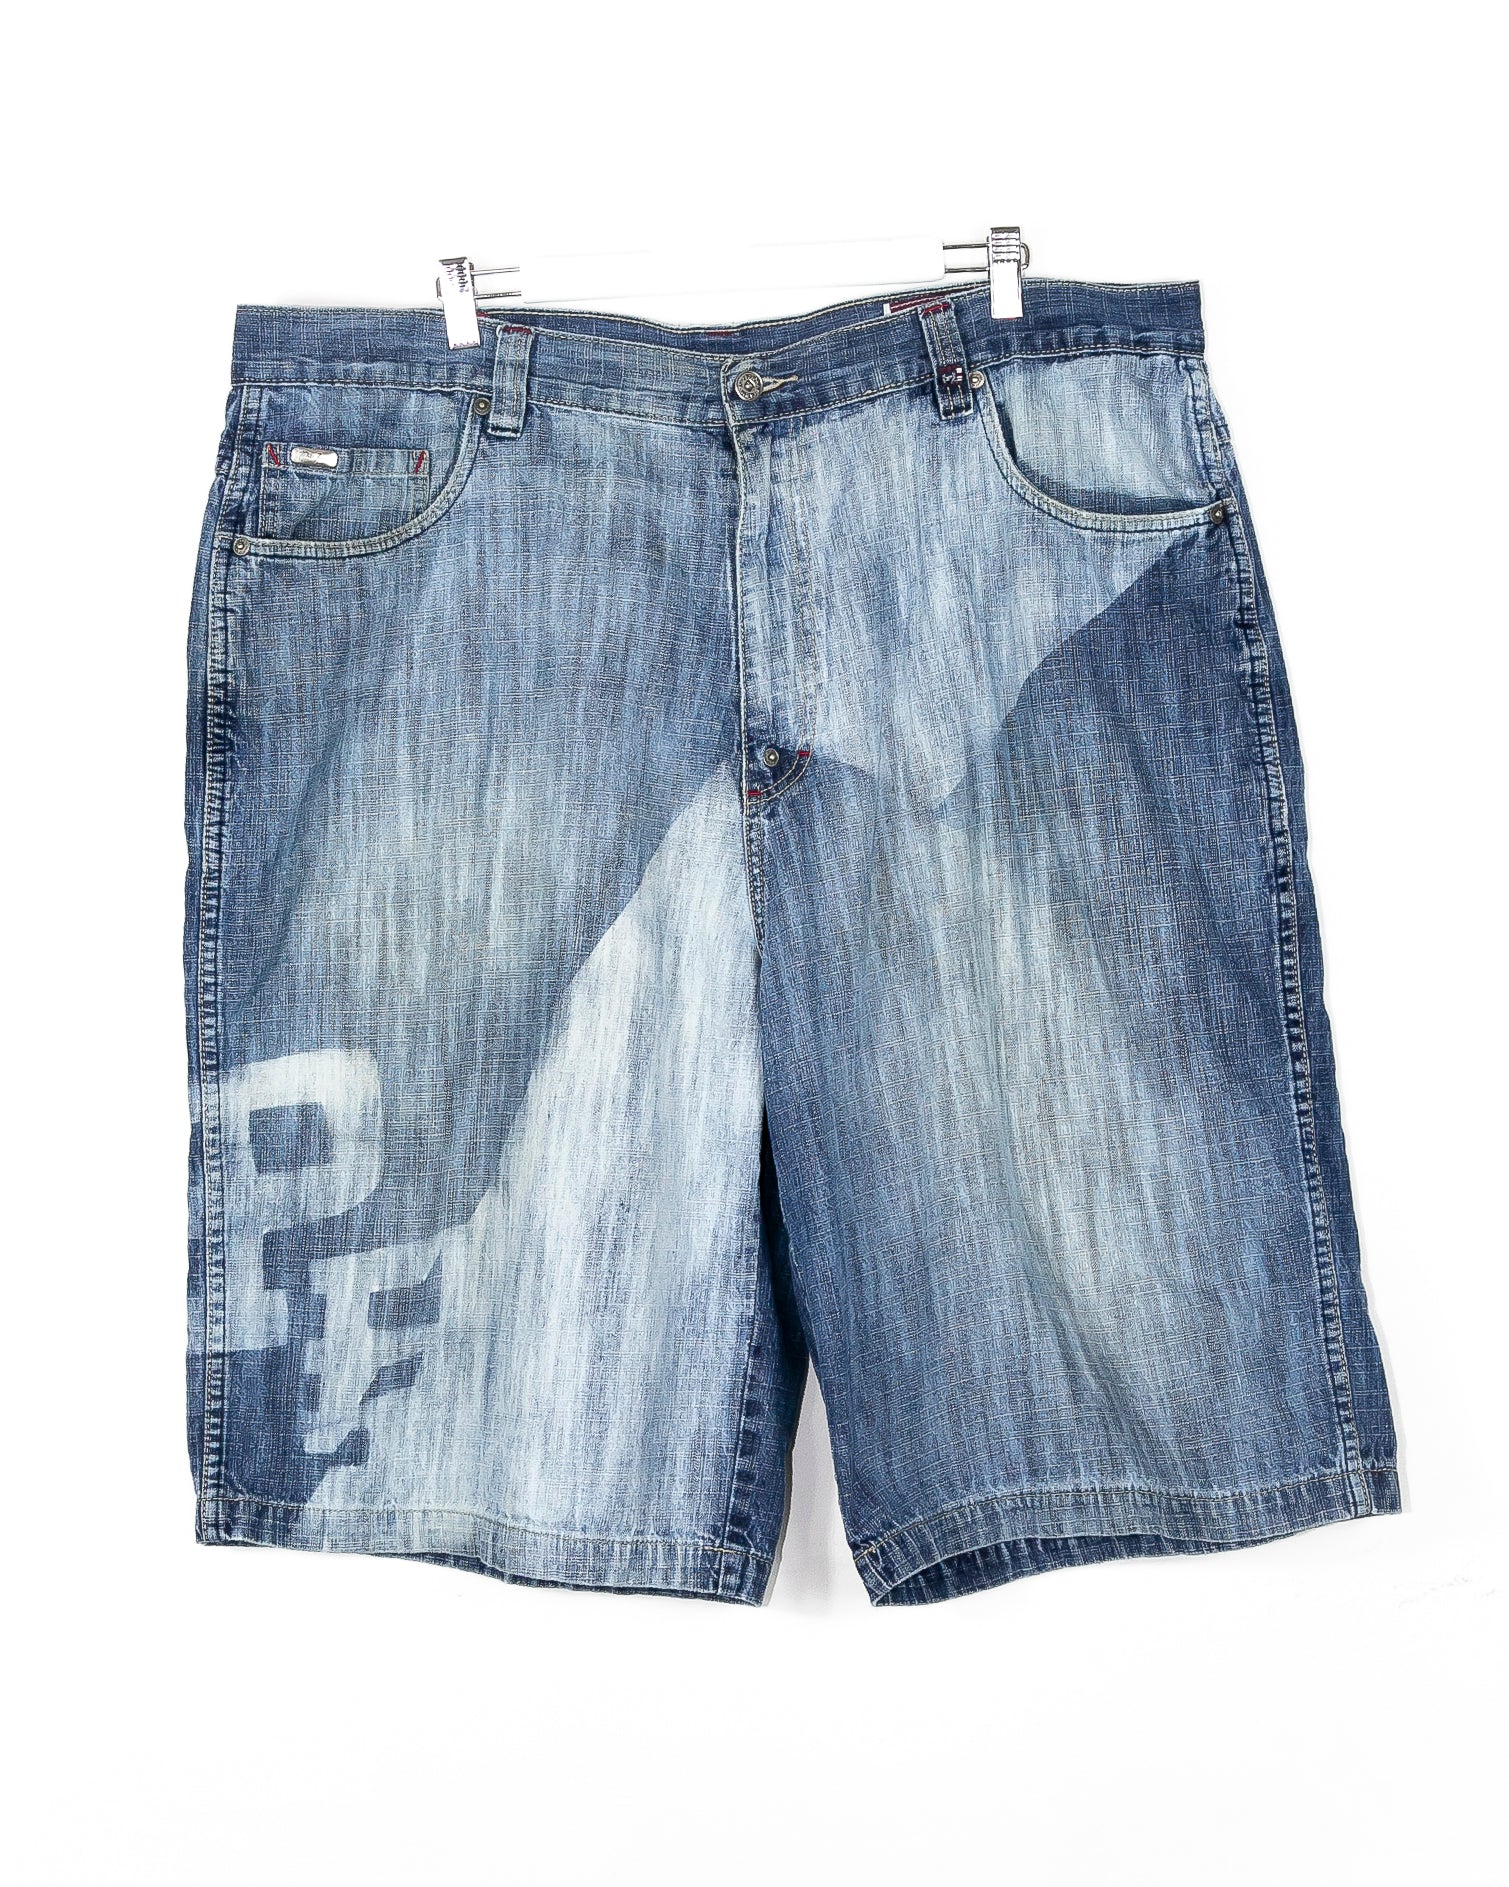 corinne colgan recommends phat farm jean shorts pic